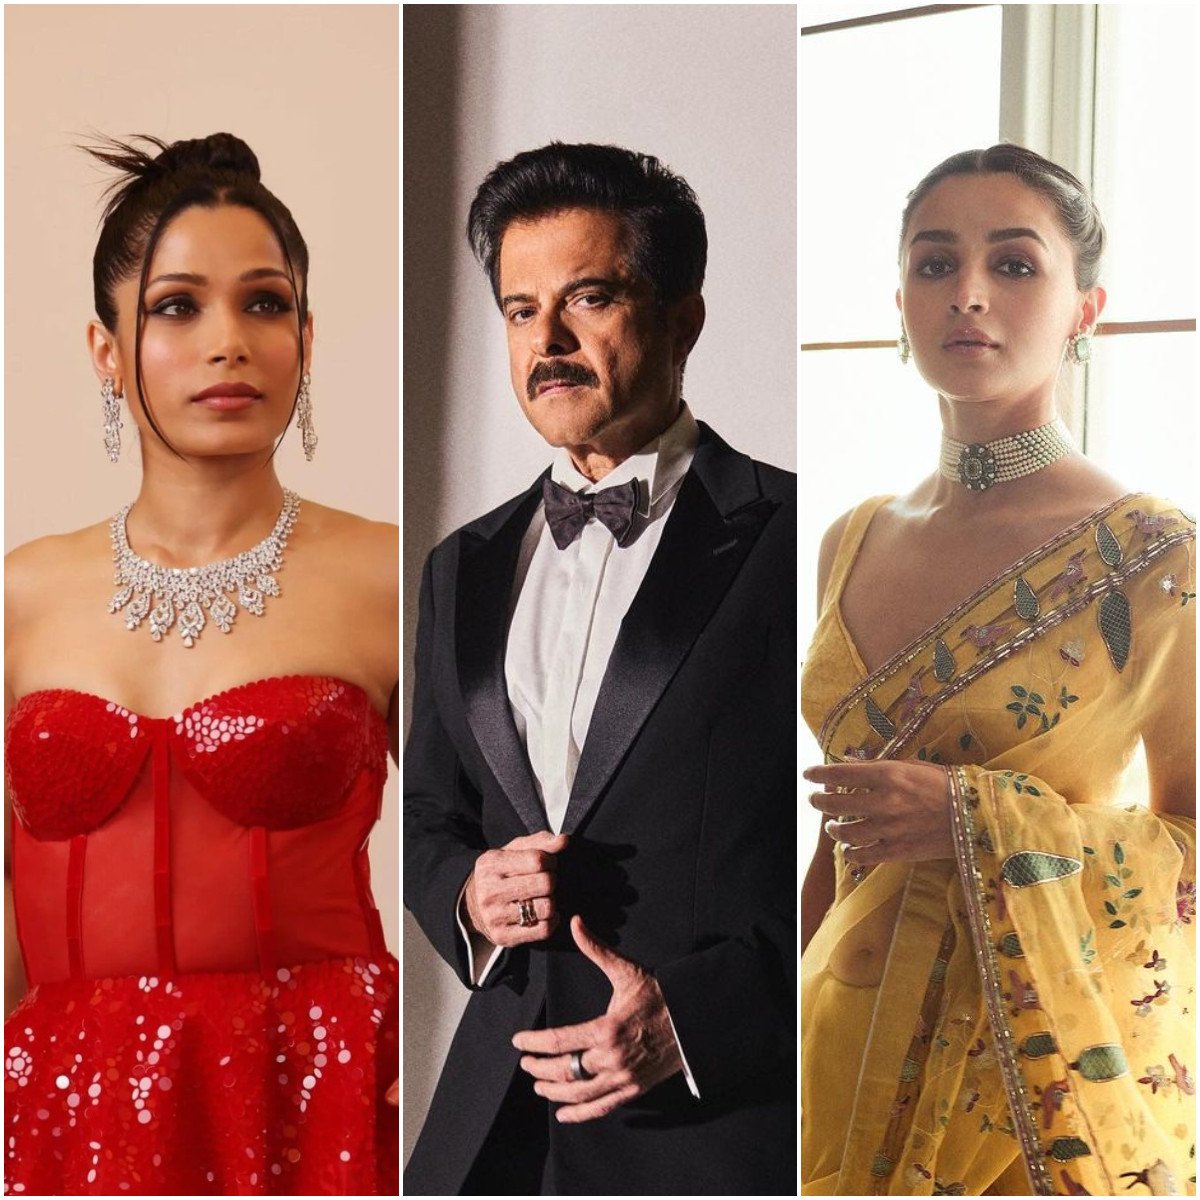 Freida Pinto, Anil Kapoor and Alia Bhatt are among the Bollywood stars to have found the greatest success in Hollywood. Photos: @freidapinto, @anilskapoor, @aliabhatt/Instagram